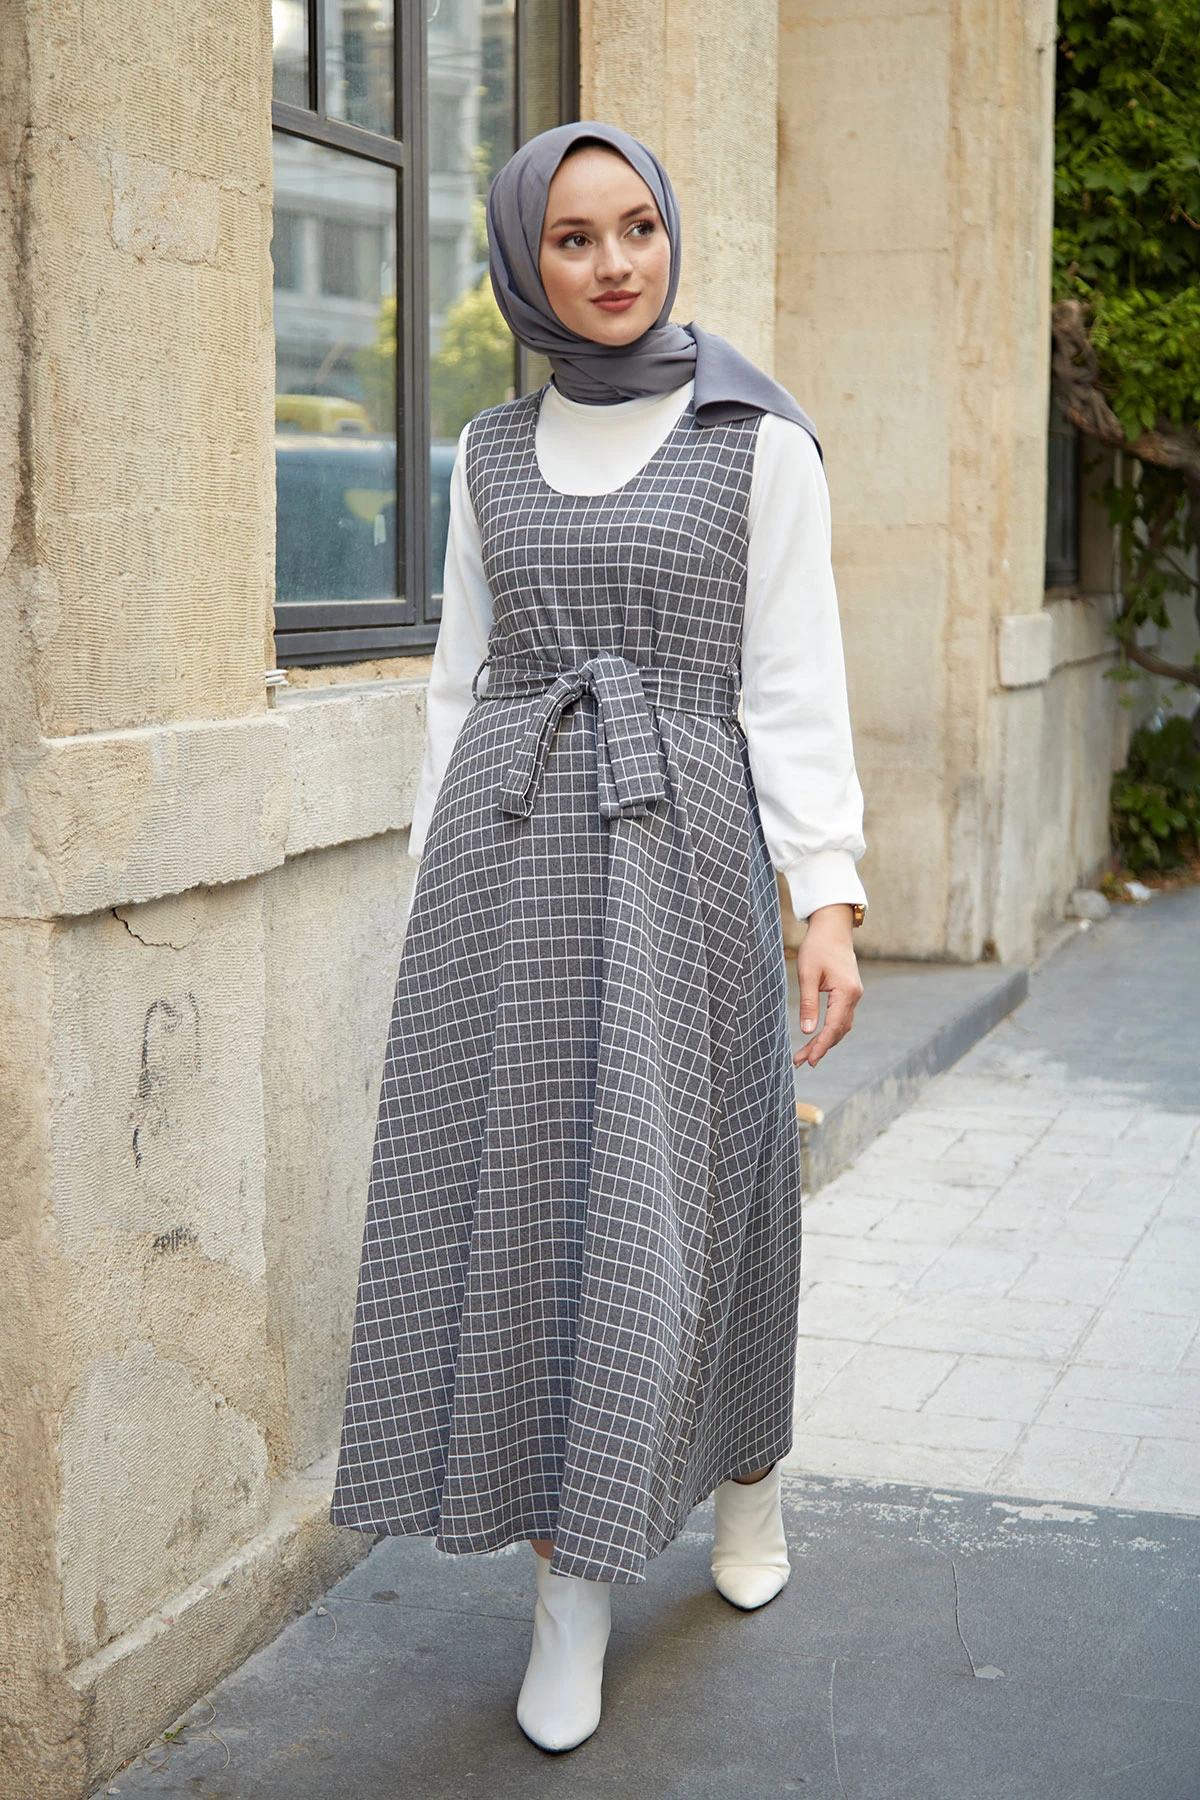 MDI Bell Model Dual Team-Gray Winter Autumn 2021 Muslim Women Hijab headscarf Islamic Turkey